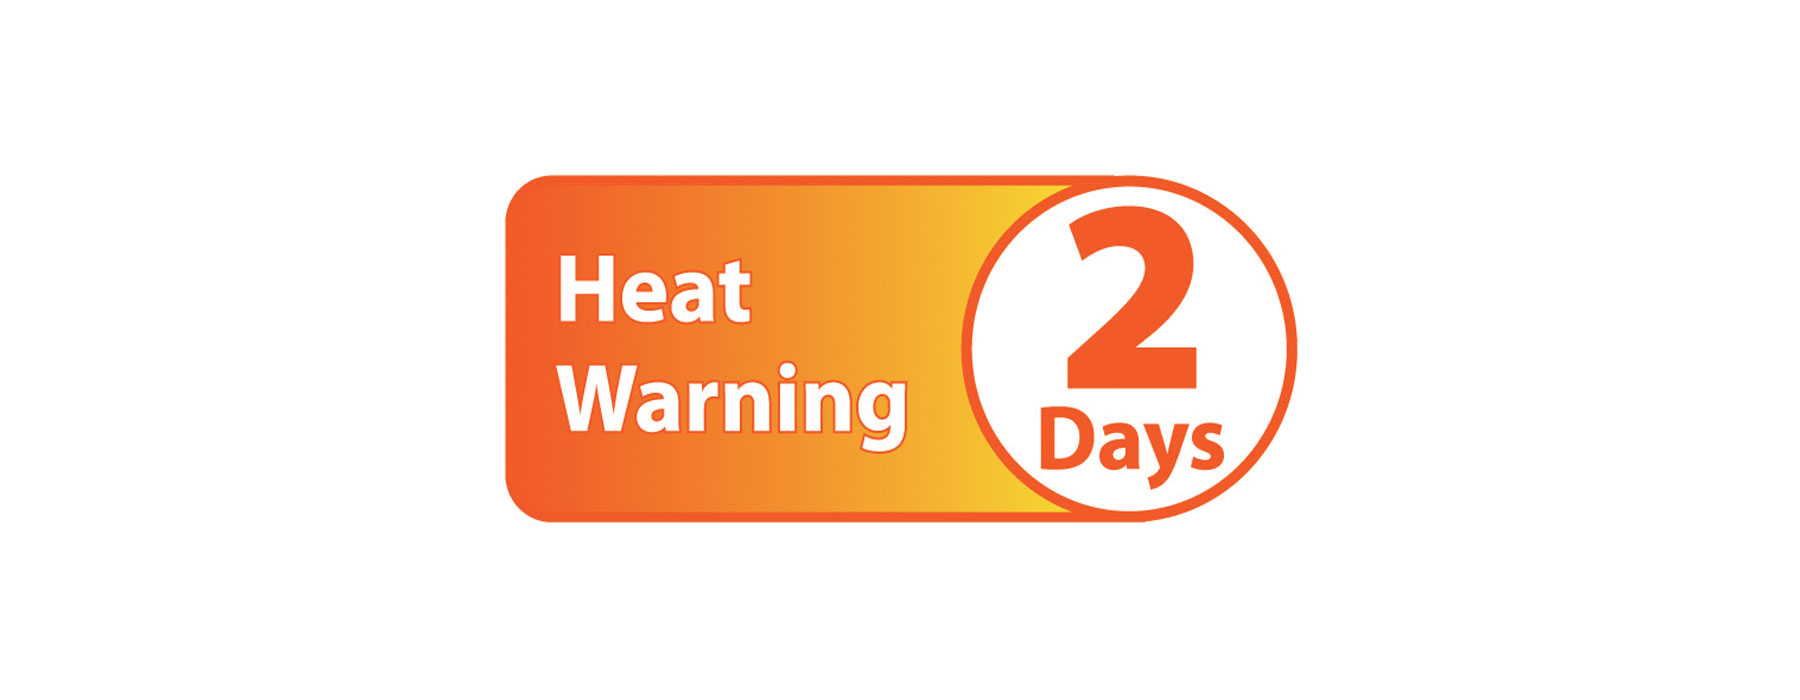 Heat Warning 2 Days Banner